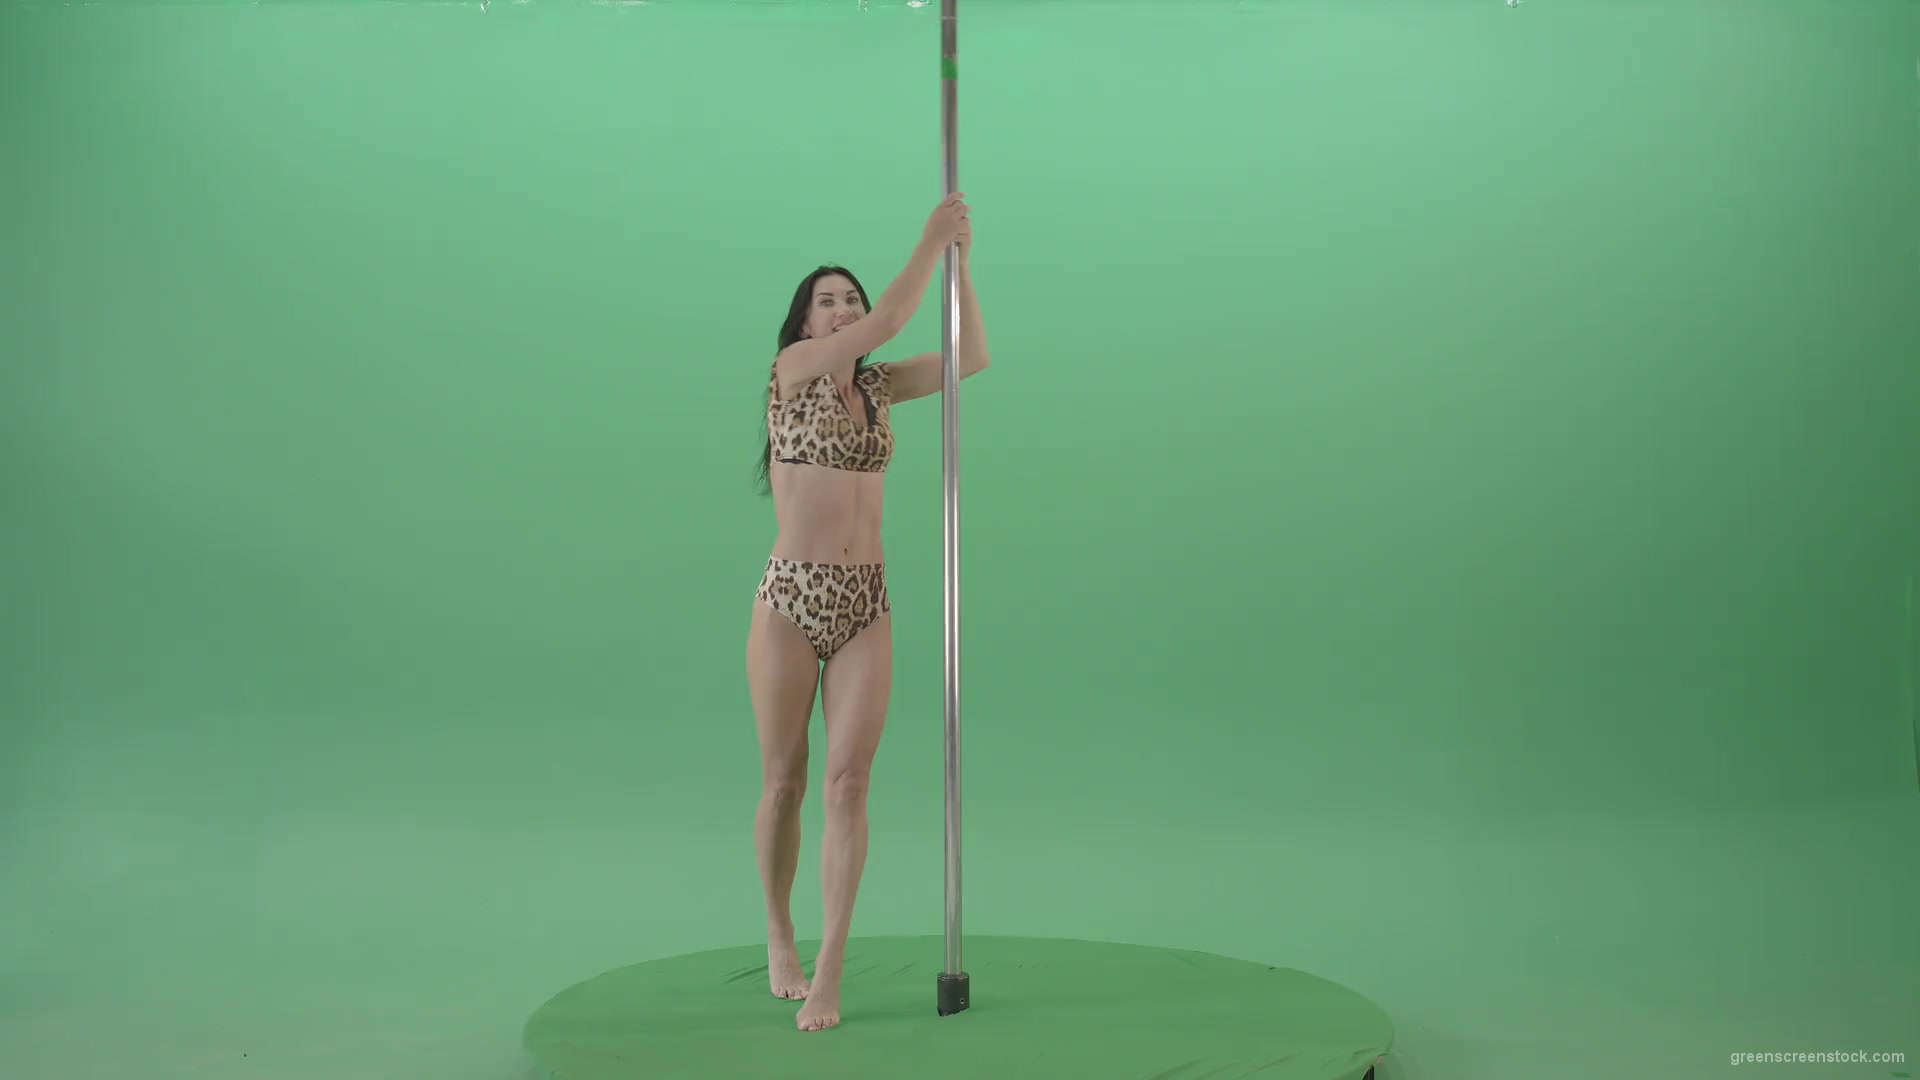 Adult-female-model-sport-girl-in-leopard-underwear-spinning-on-pilon-over-Green-Screen-4K-Video-Footage-1920_001 Green Screen Stock